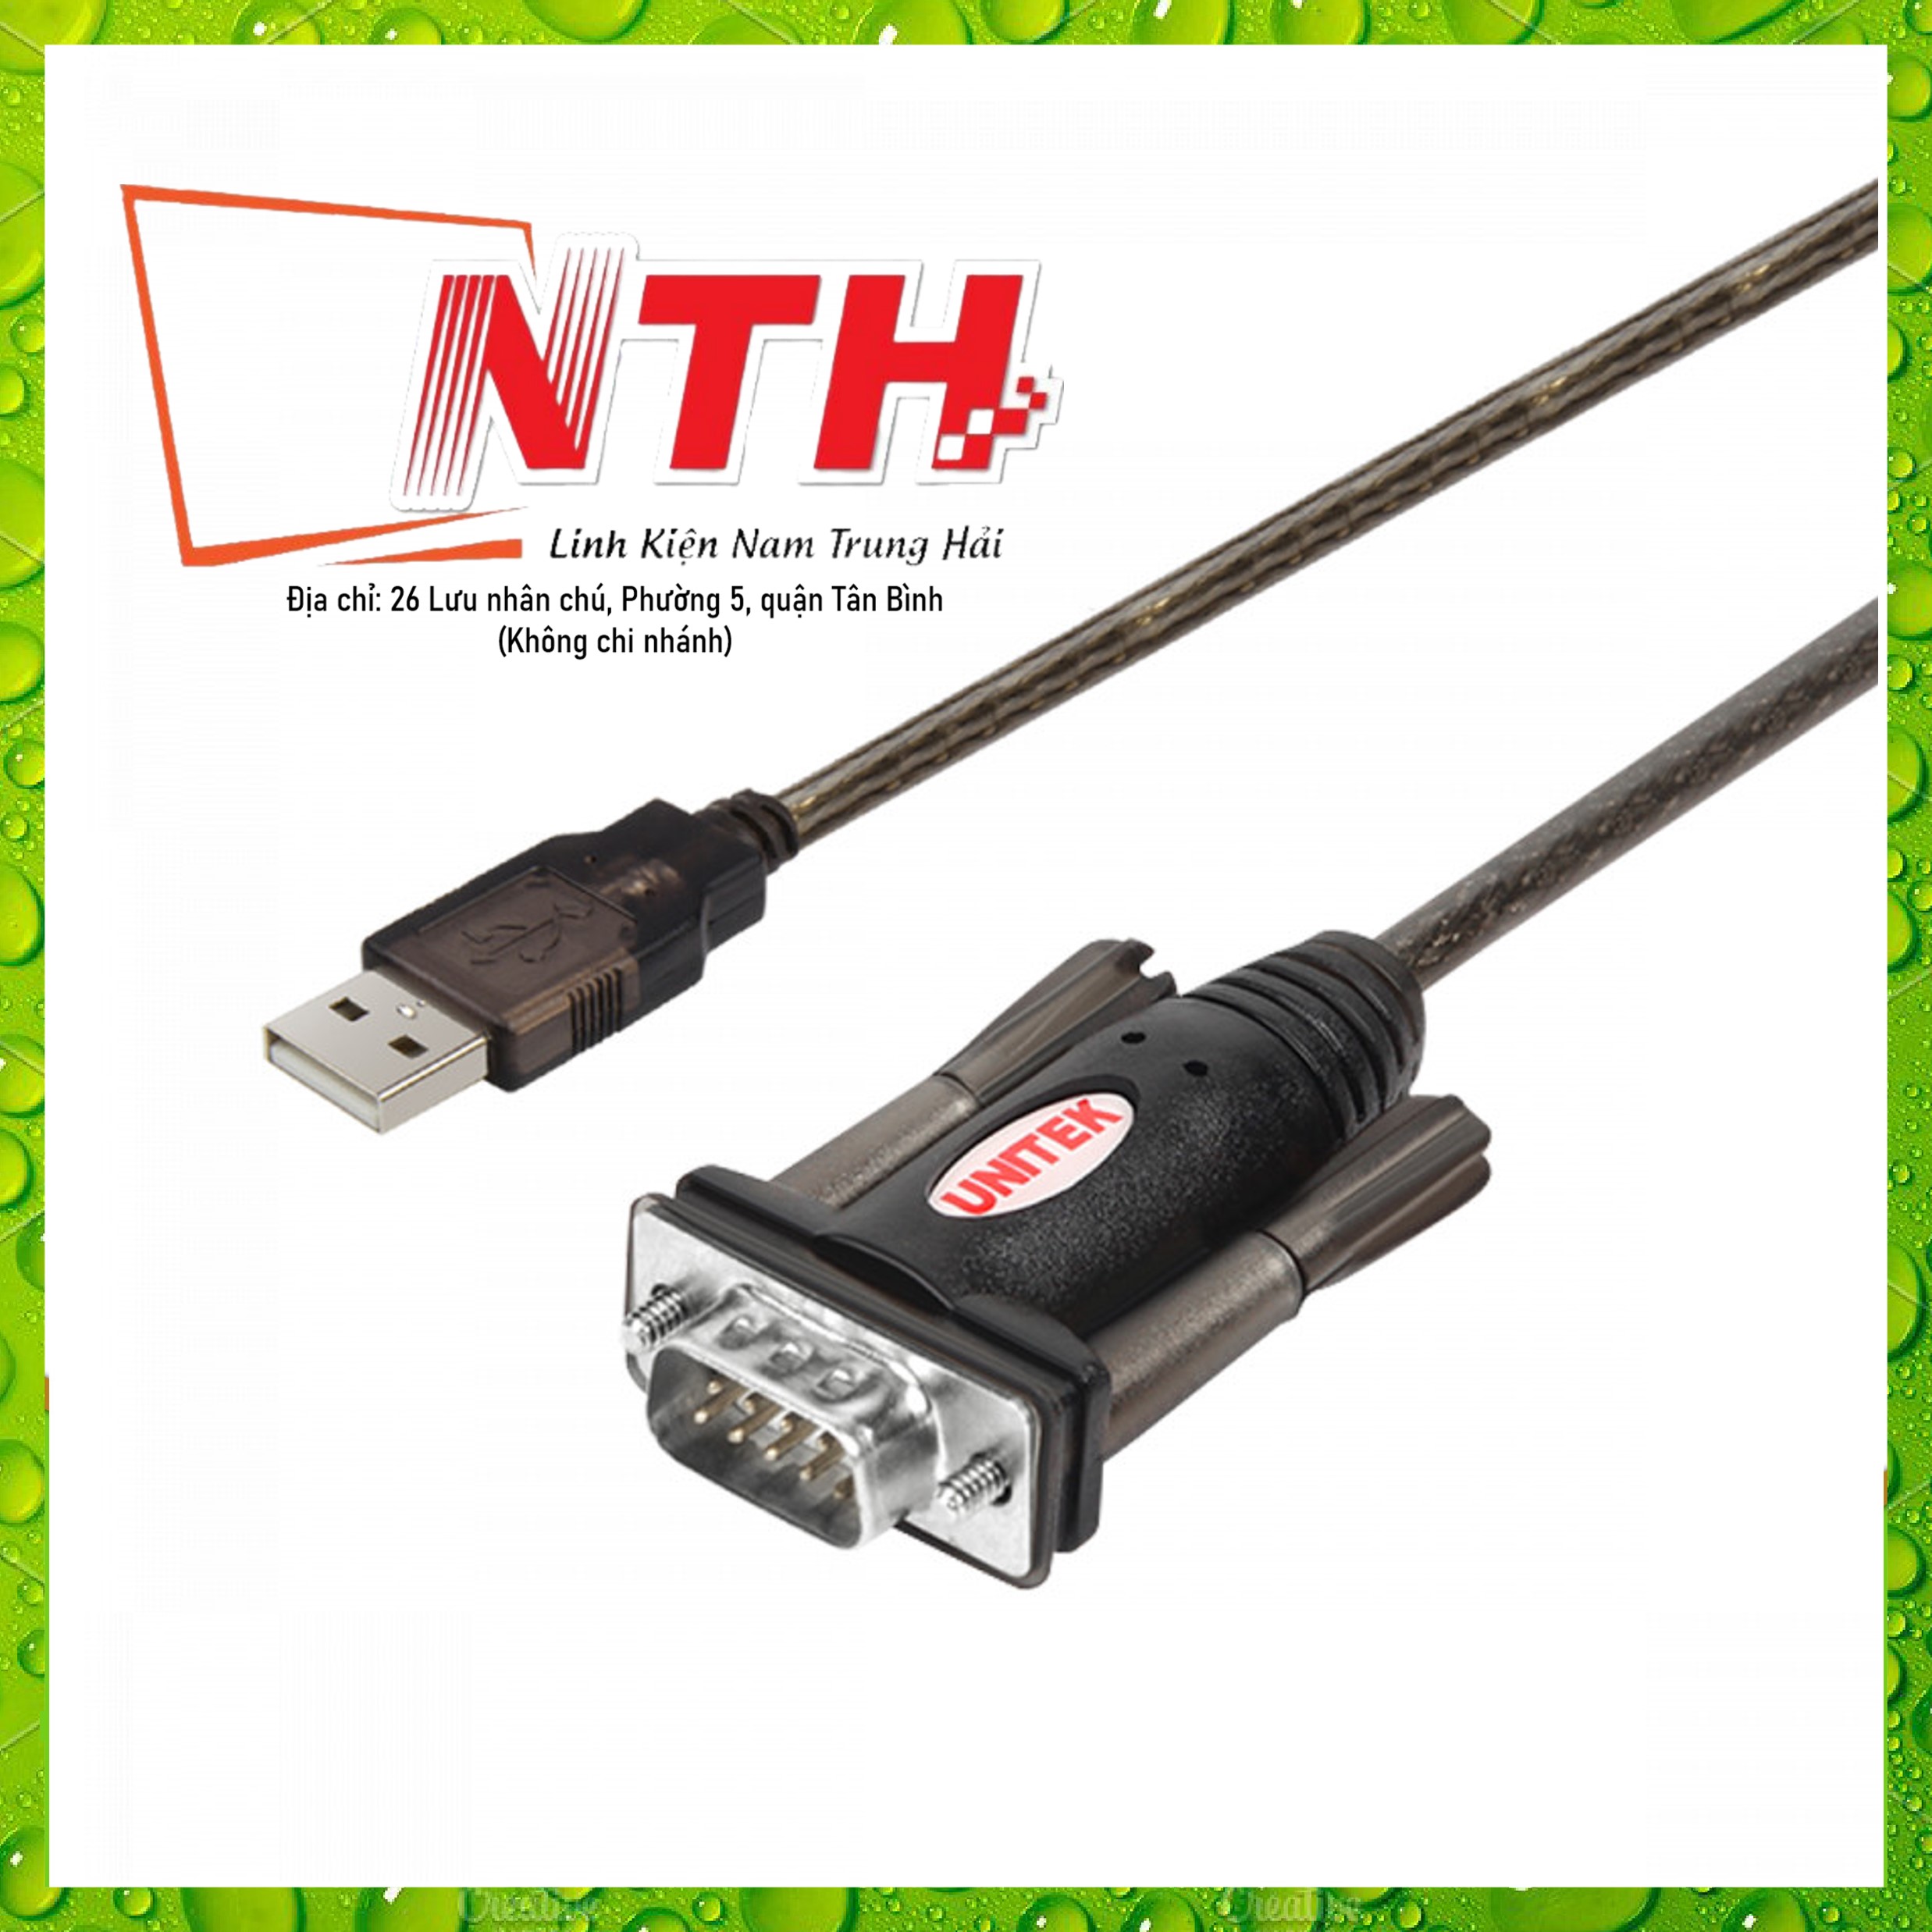 Cáp USB to Com (USB to RS232) Unitek Y-105